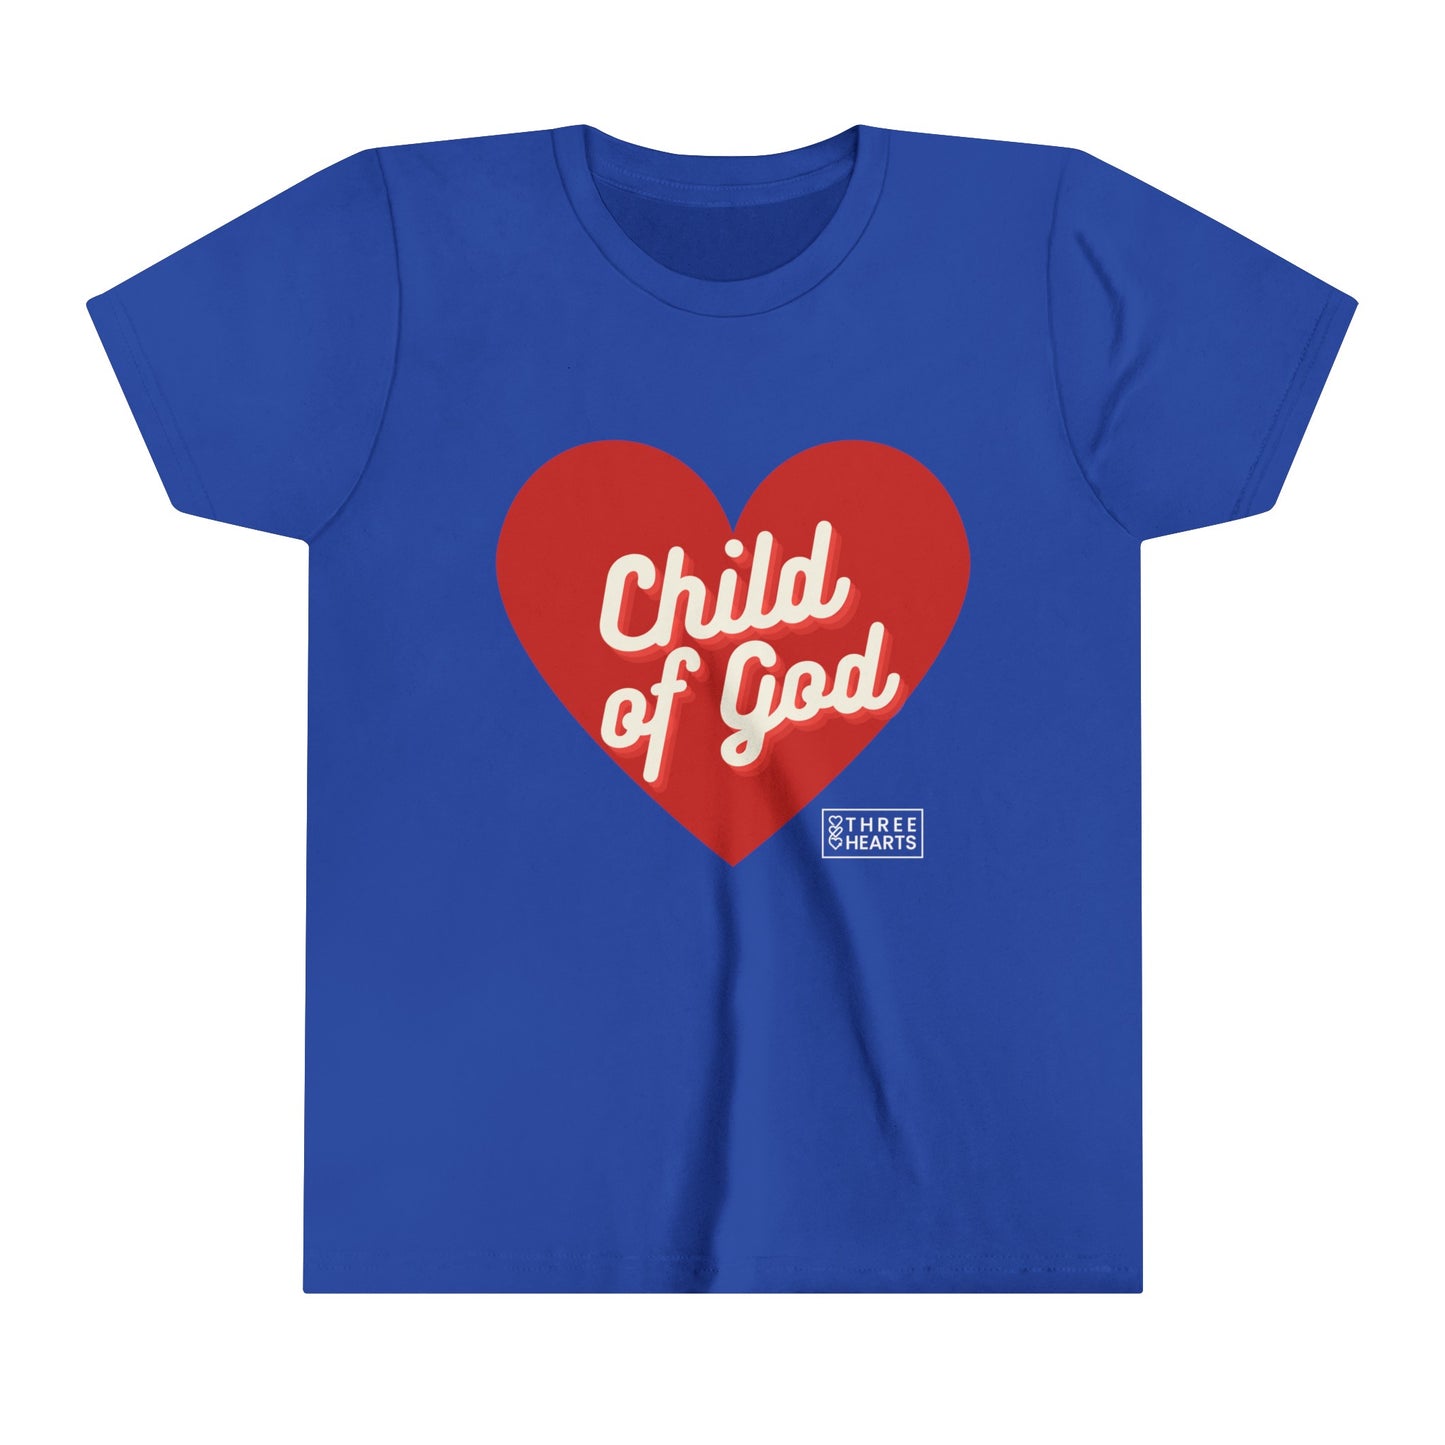 Child of God Youth T-Shirt